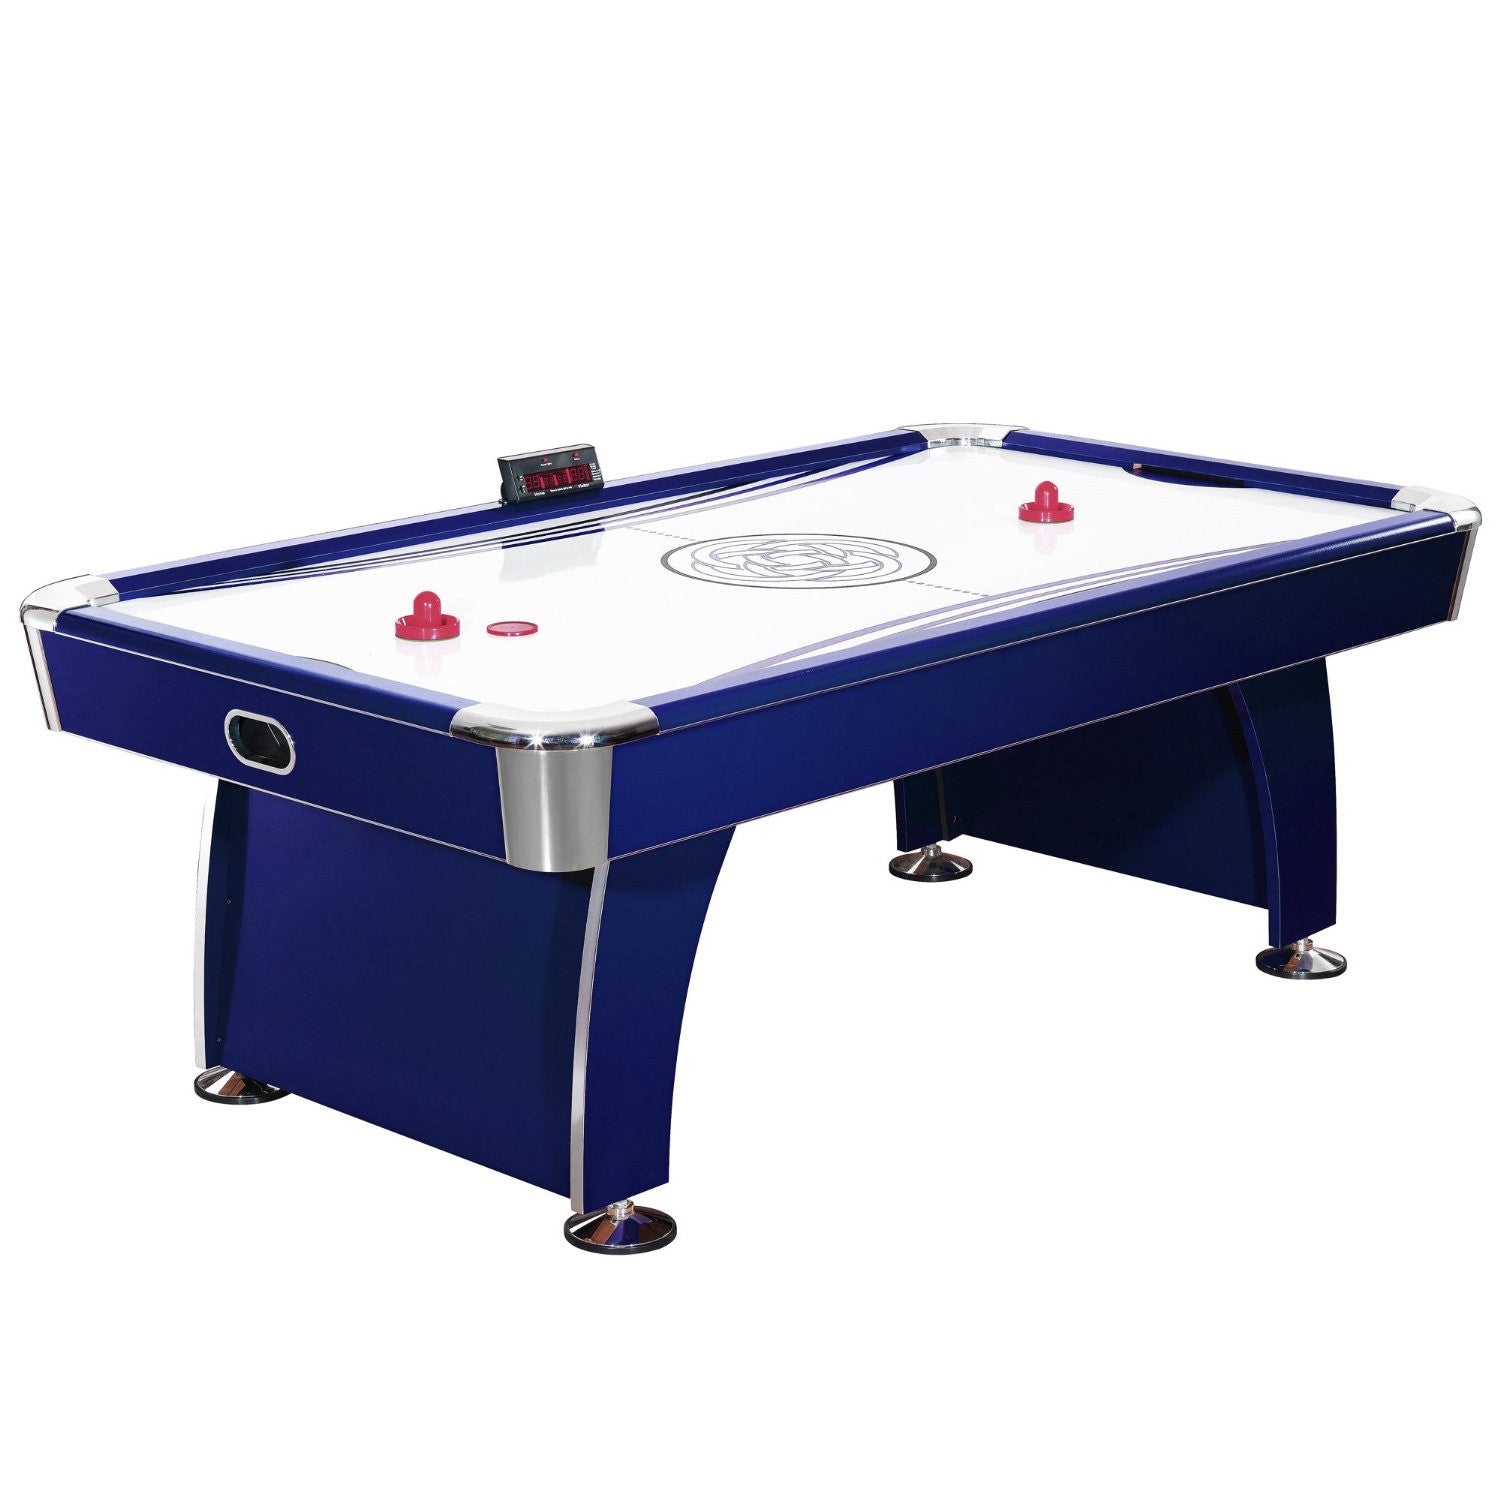 Picture of Hathaway 7.5' Phantom Air Hockey Table in Dark Blue/Silver